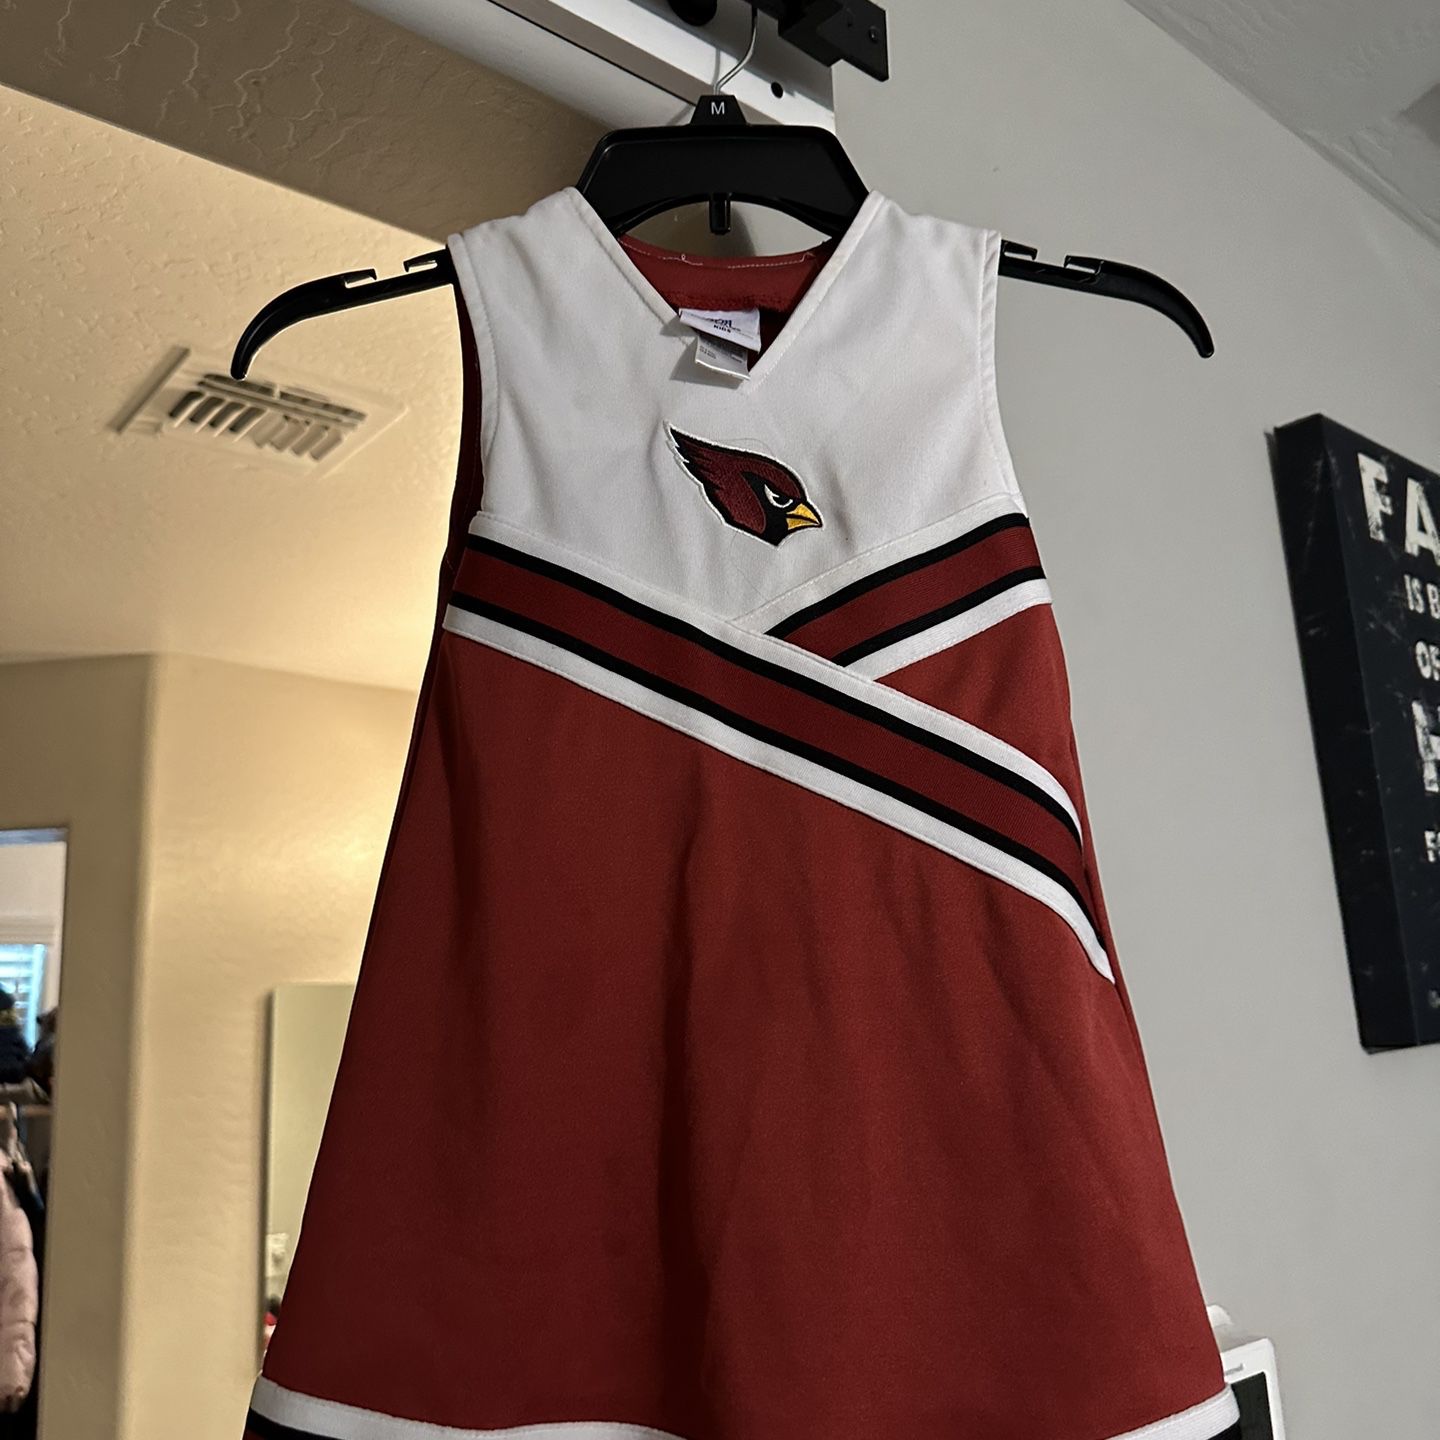 Girls Size 4 Arizona Cardinals Cheer Dress 